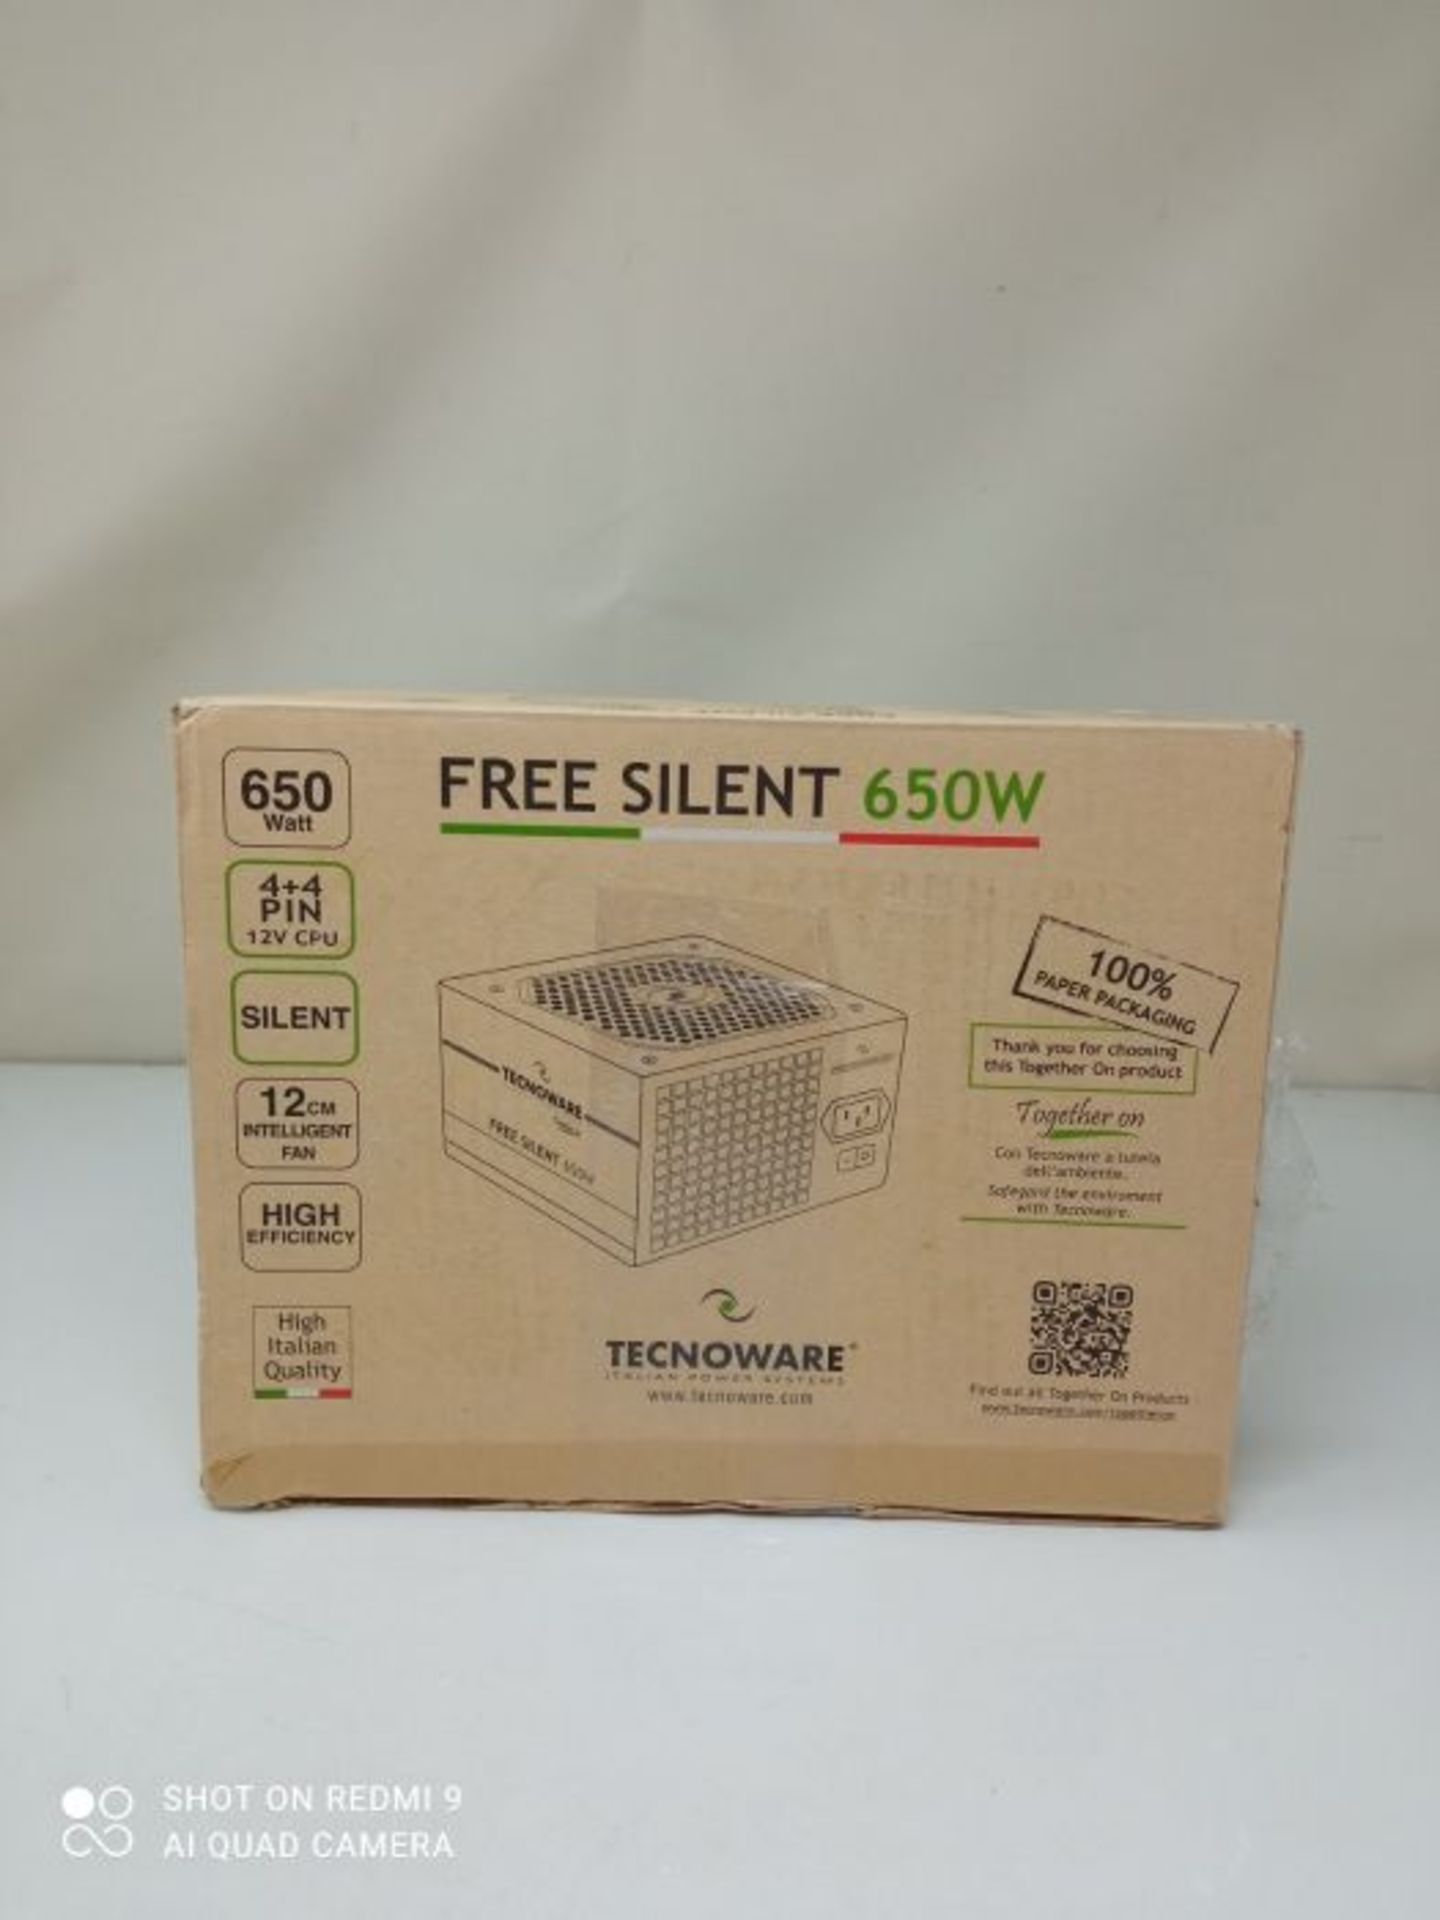 Tecnoware ATX 650 W Power Supply for PC - Silent 12 cm Fan - Connectors 3 x SATA, 1 x - Image 2 of 3